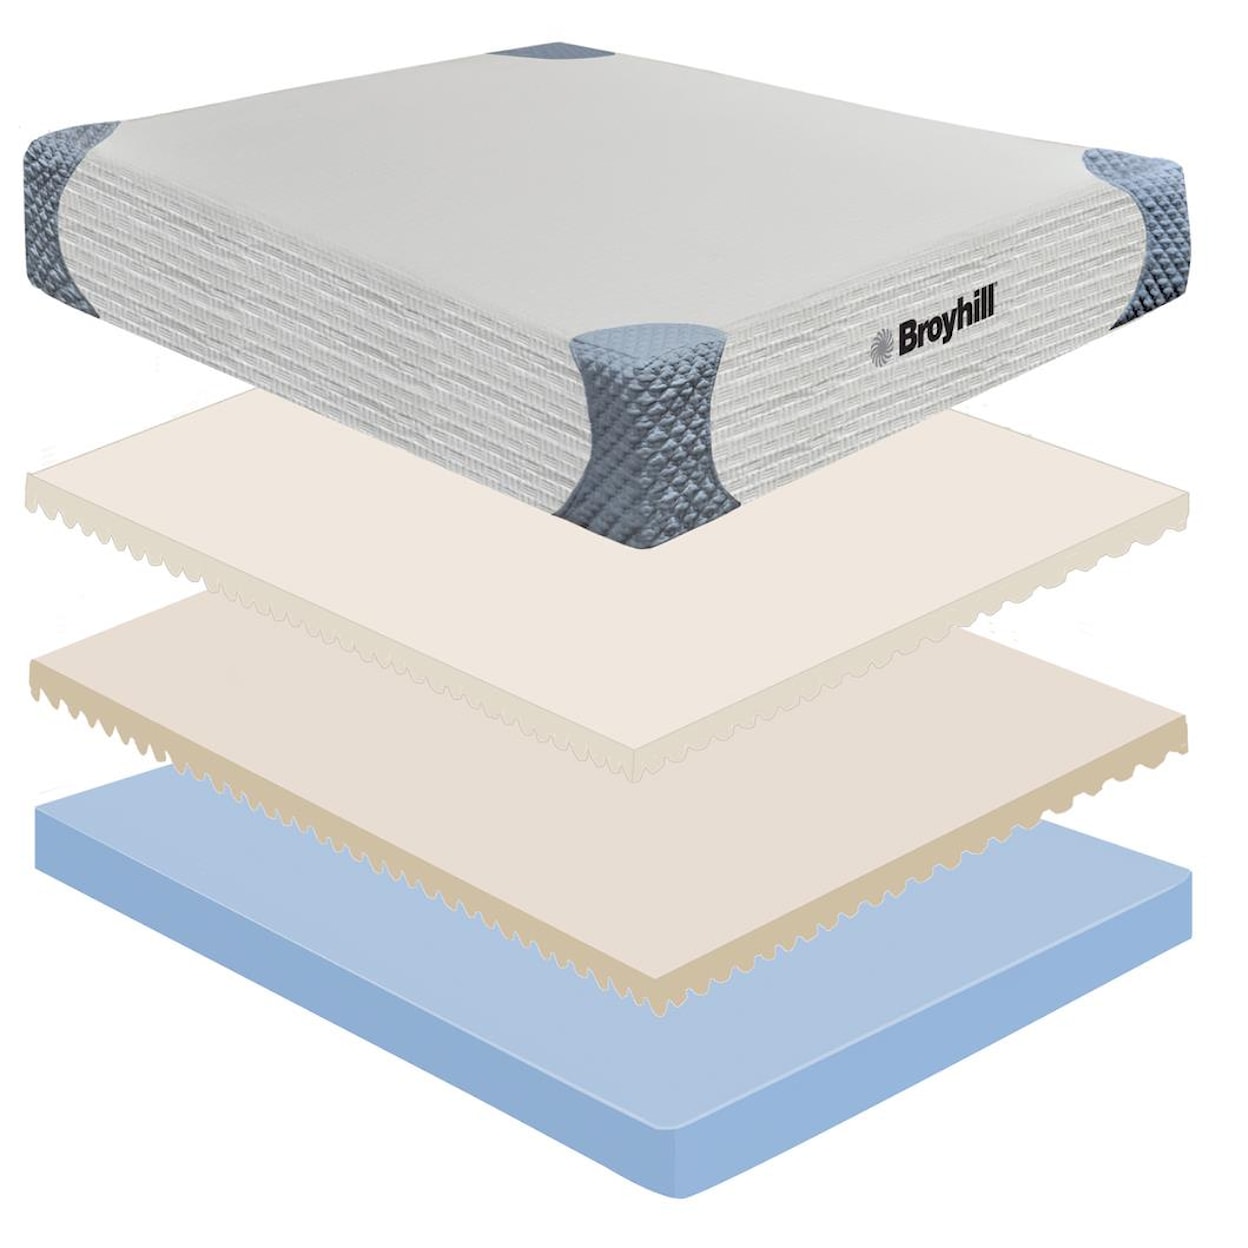 Boyd Specialty Sleep Sensura Twin Plush Memory Foam Mattress